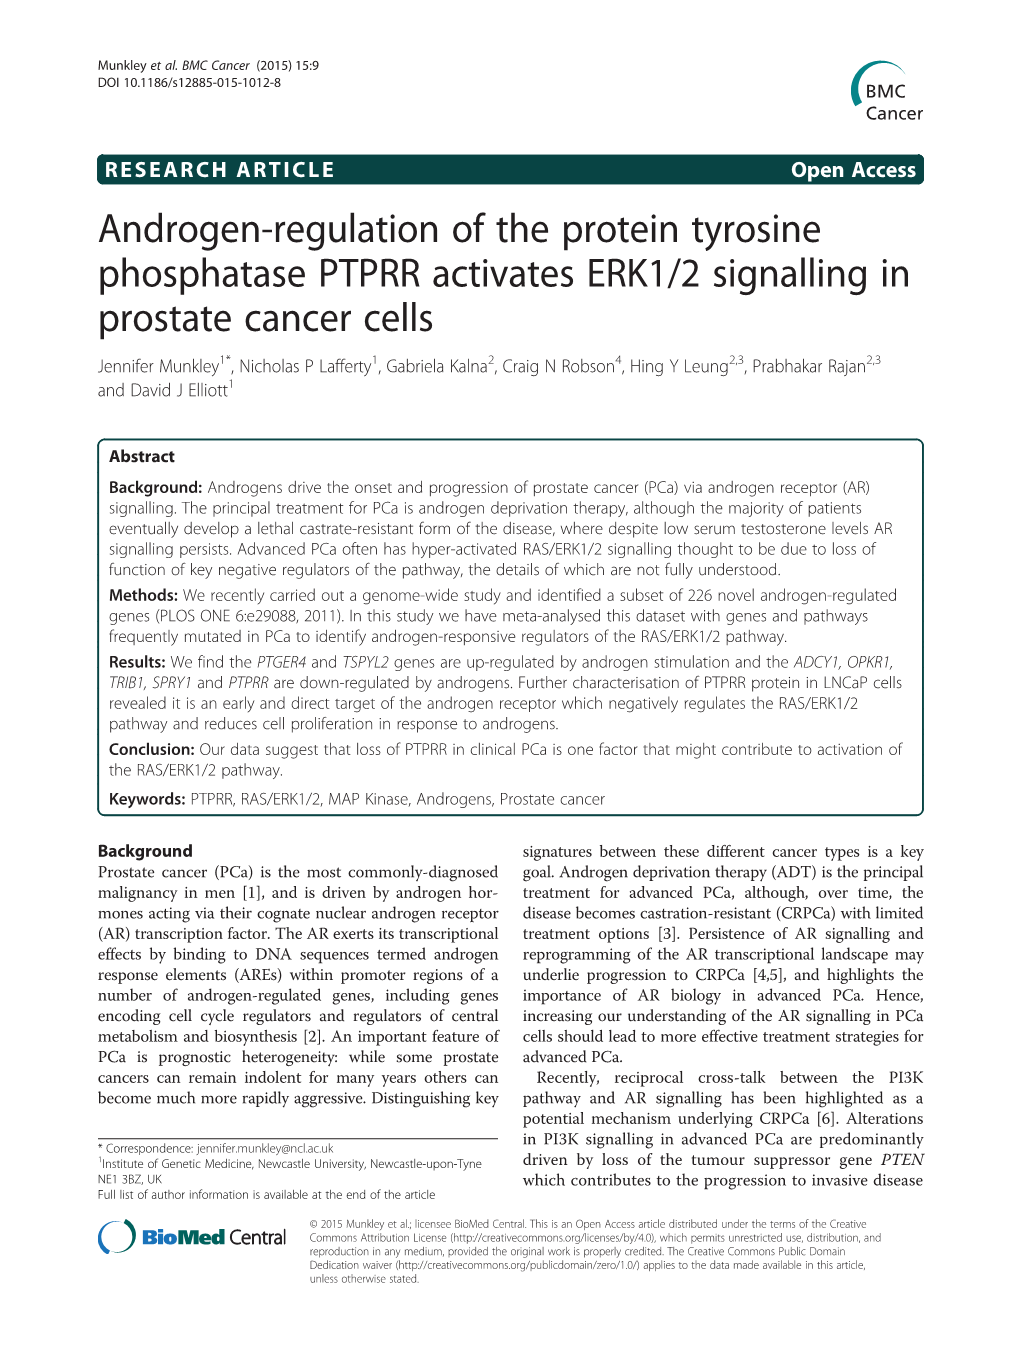 Androgen-Regulation of the Protein Tyrosine